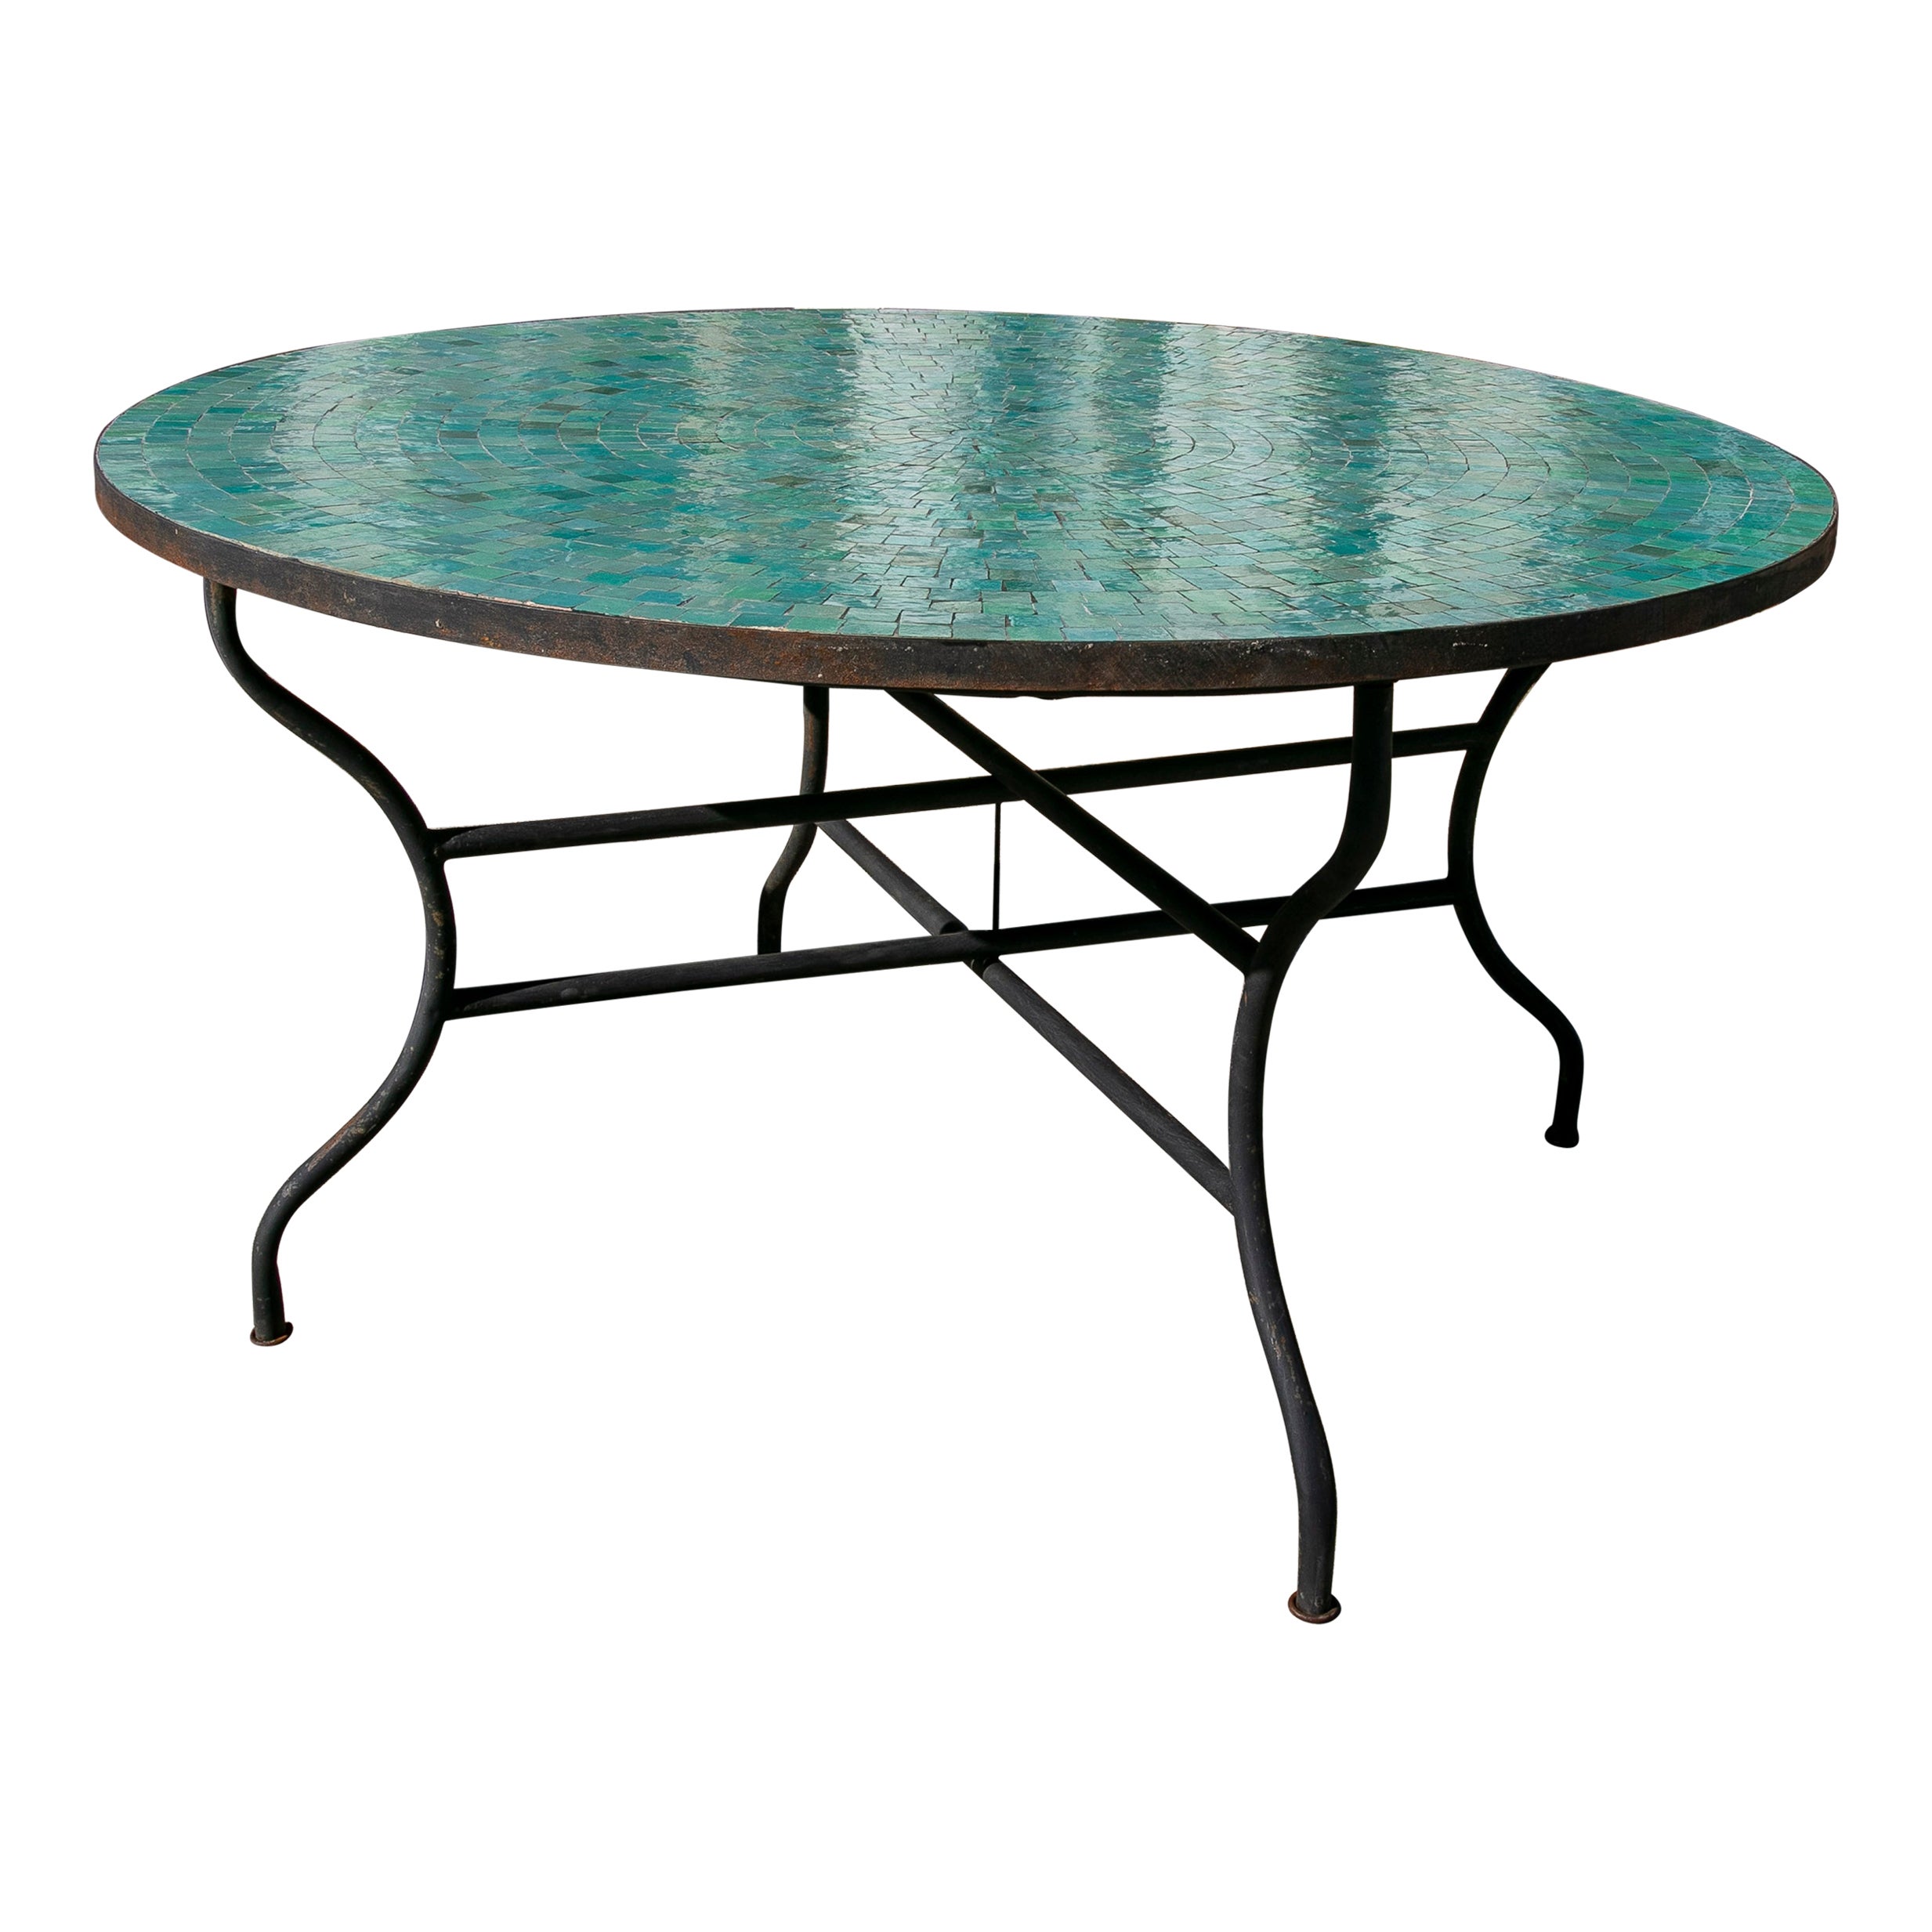 Modern Round Spanish Green Glazed Zellige Tiles Mosaic Outdoor Table & Iron Base